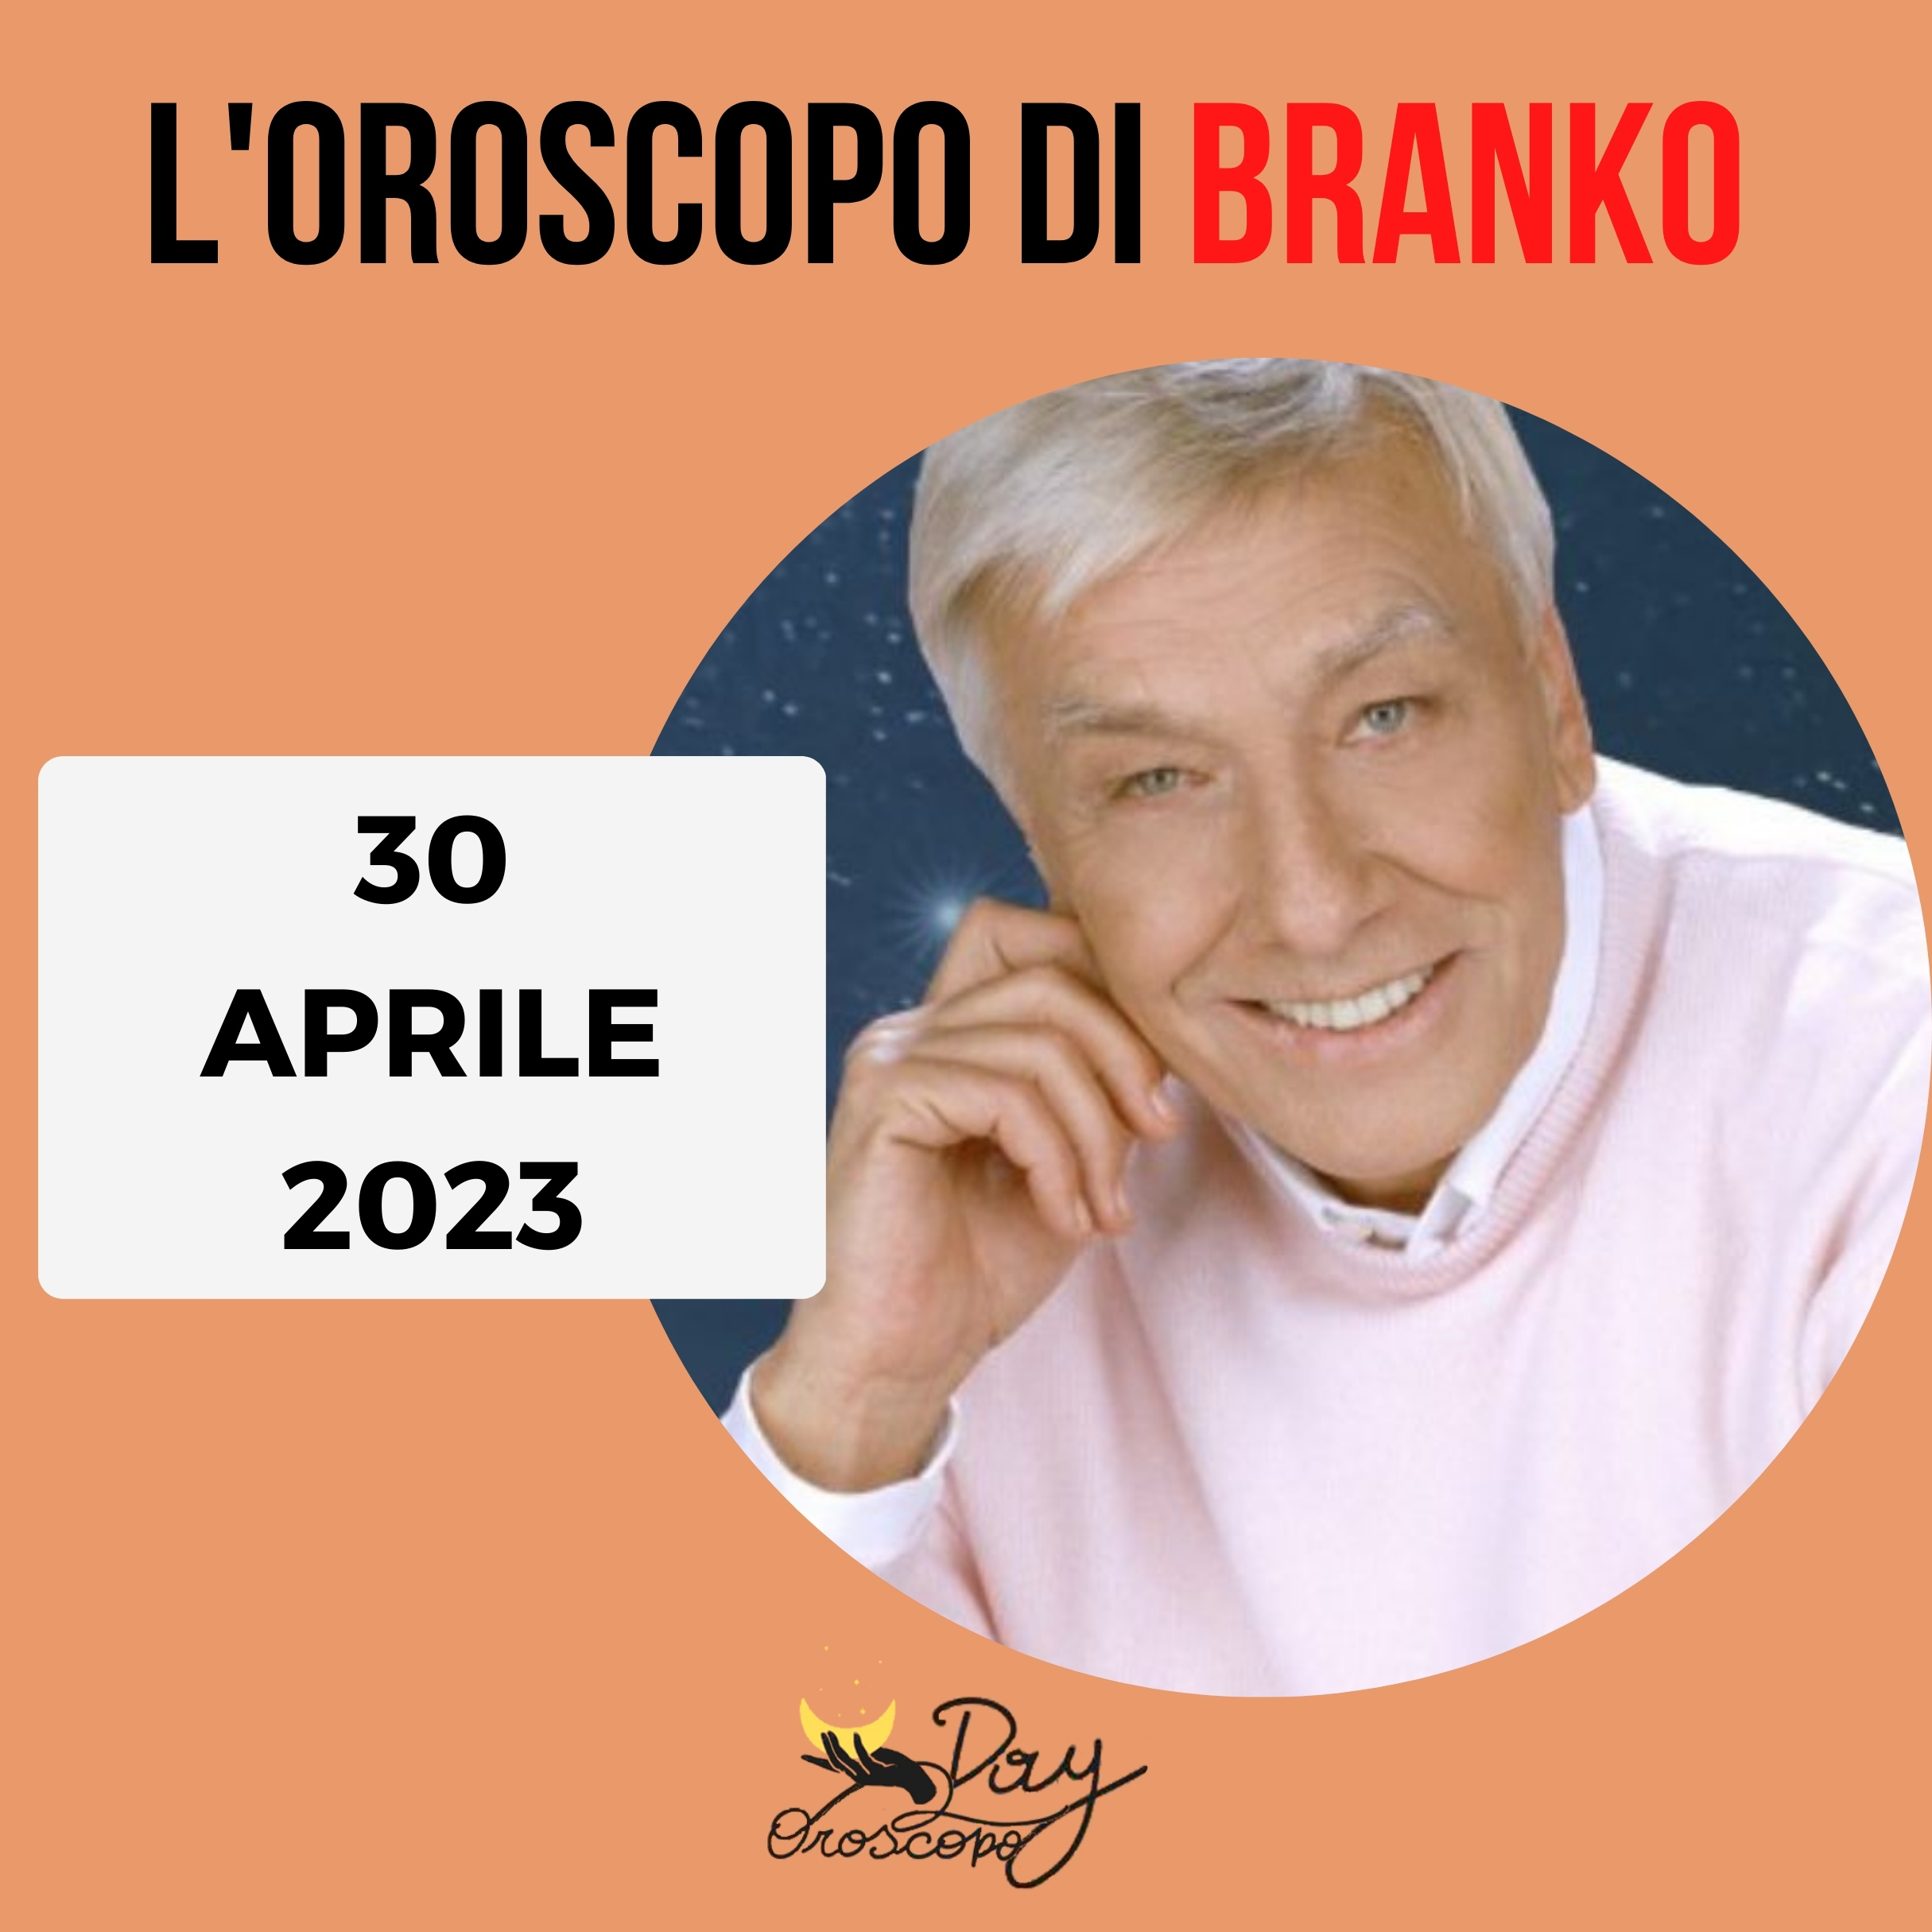 Oroscopo oggi domani Branko 30 aprile 2023